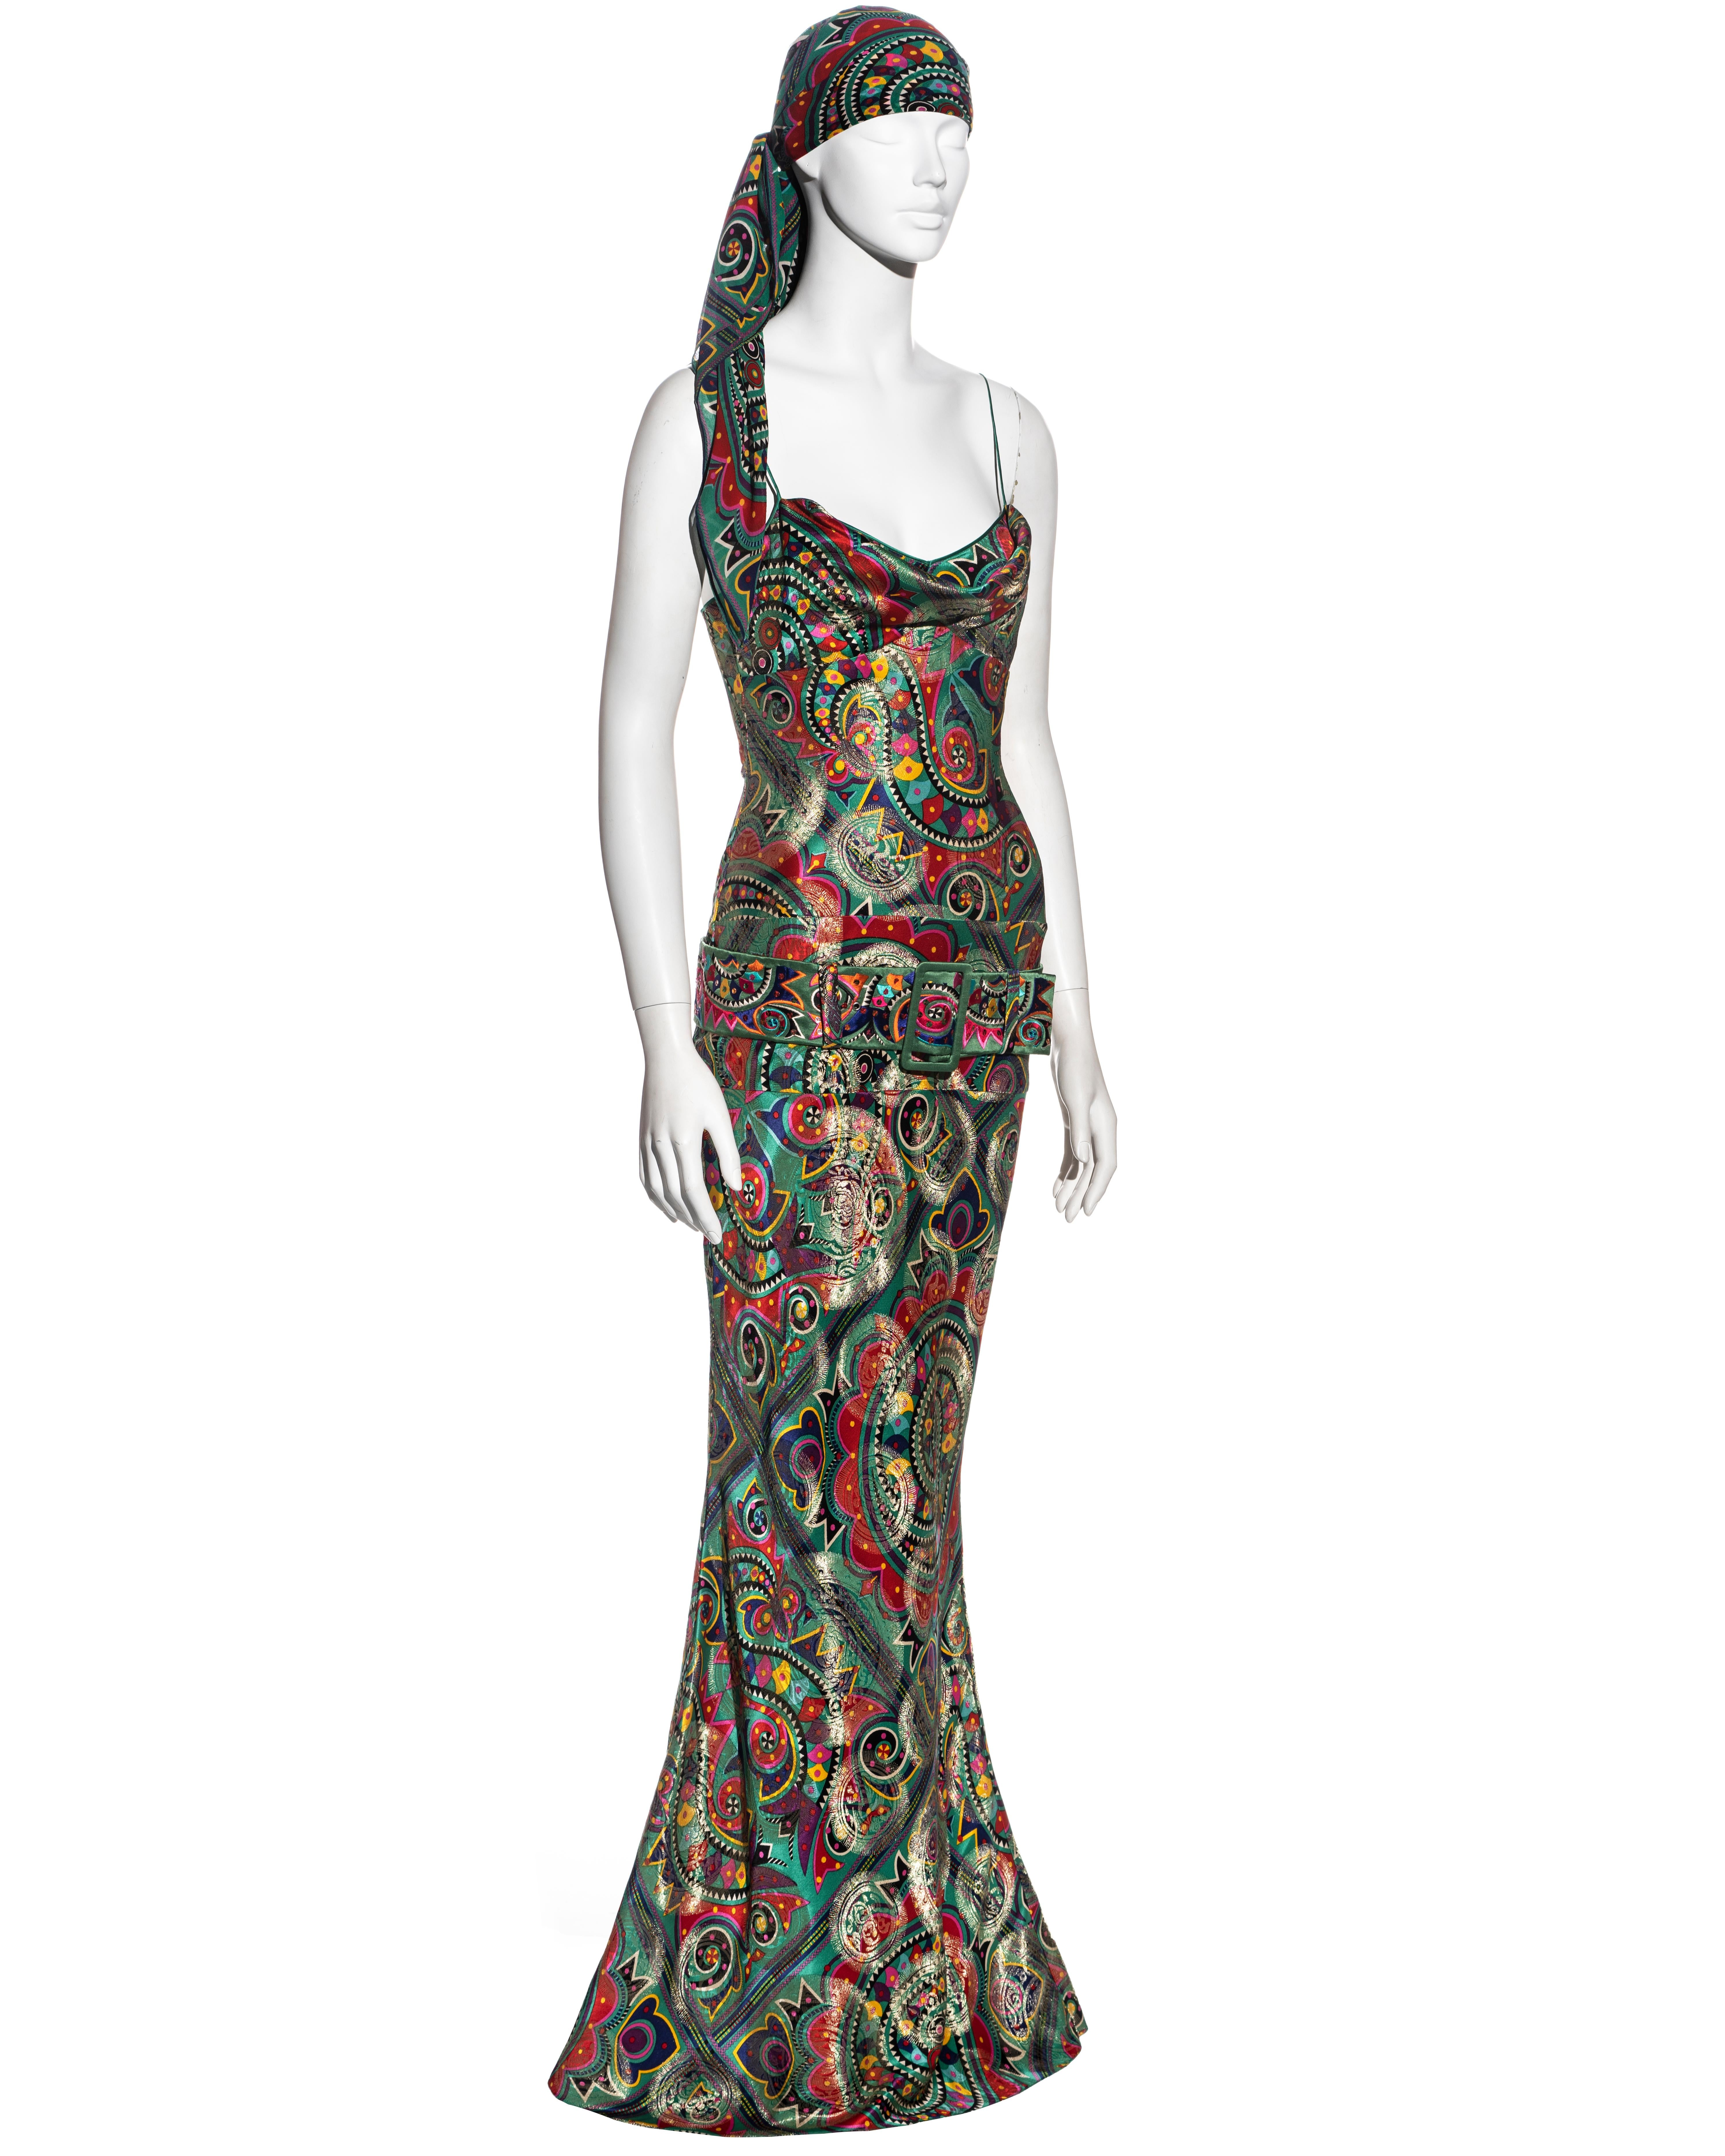 Gray John Galliano multicoloured metallic silk jacquard evening dress, fw 2002 For Sale